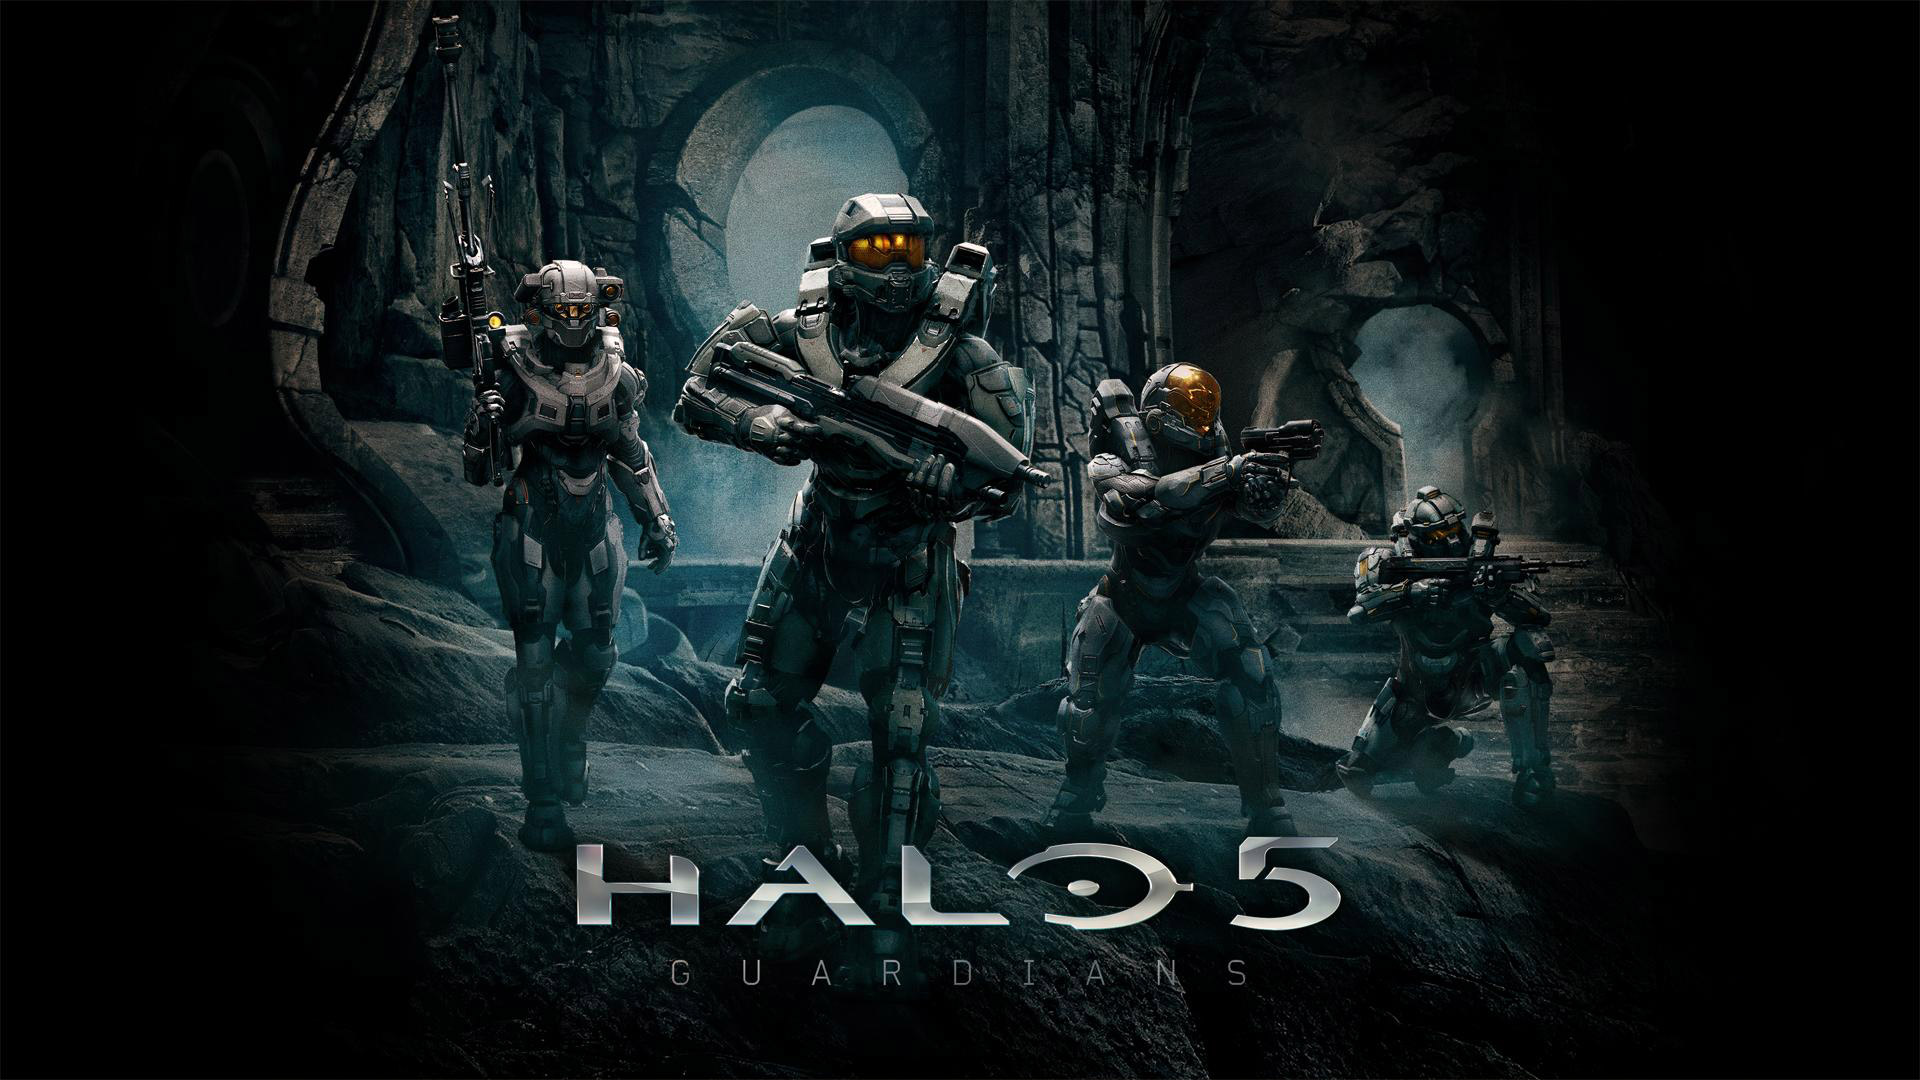 Halo 5 Guardians Wallpaper in 1920x1080 1920x1080